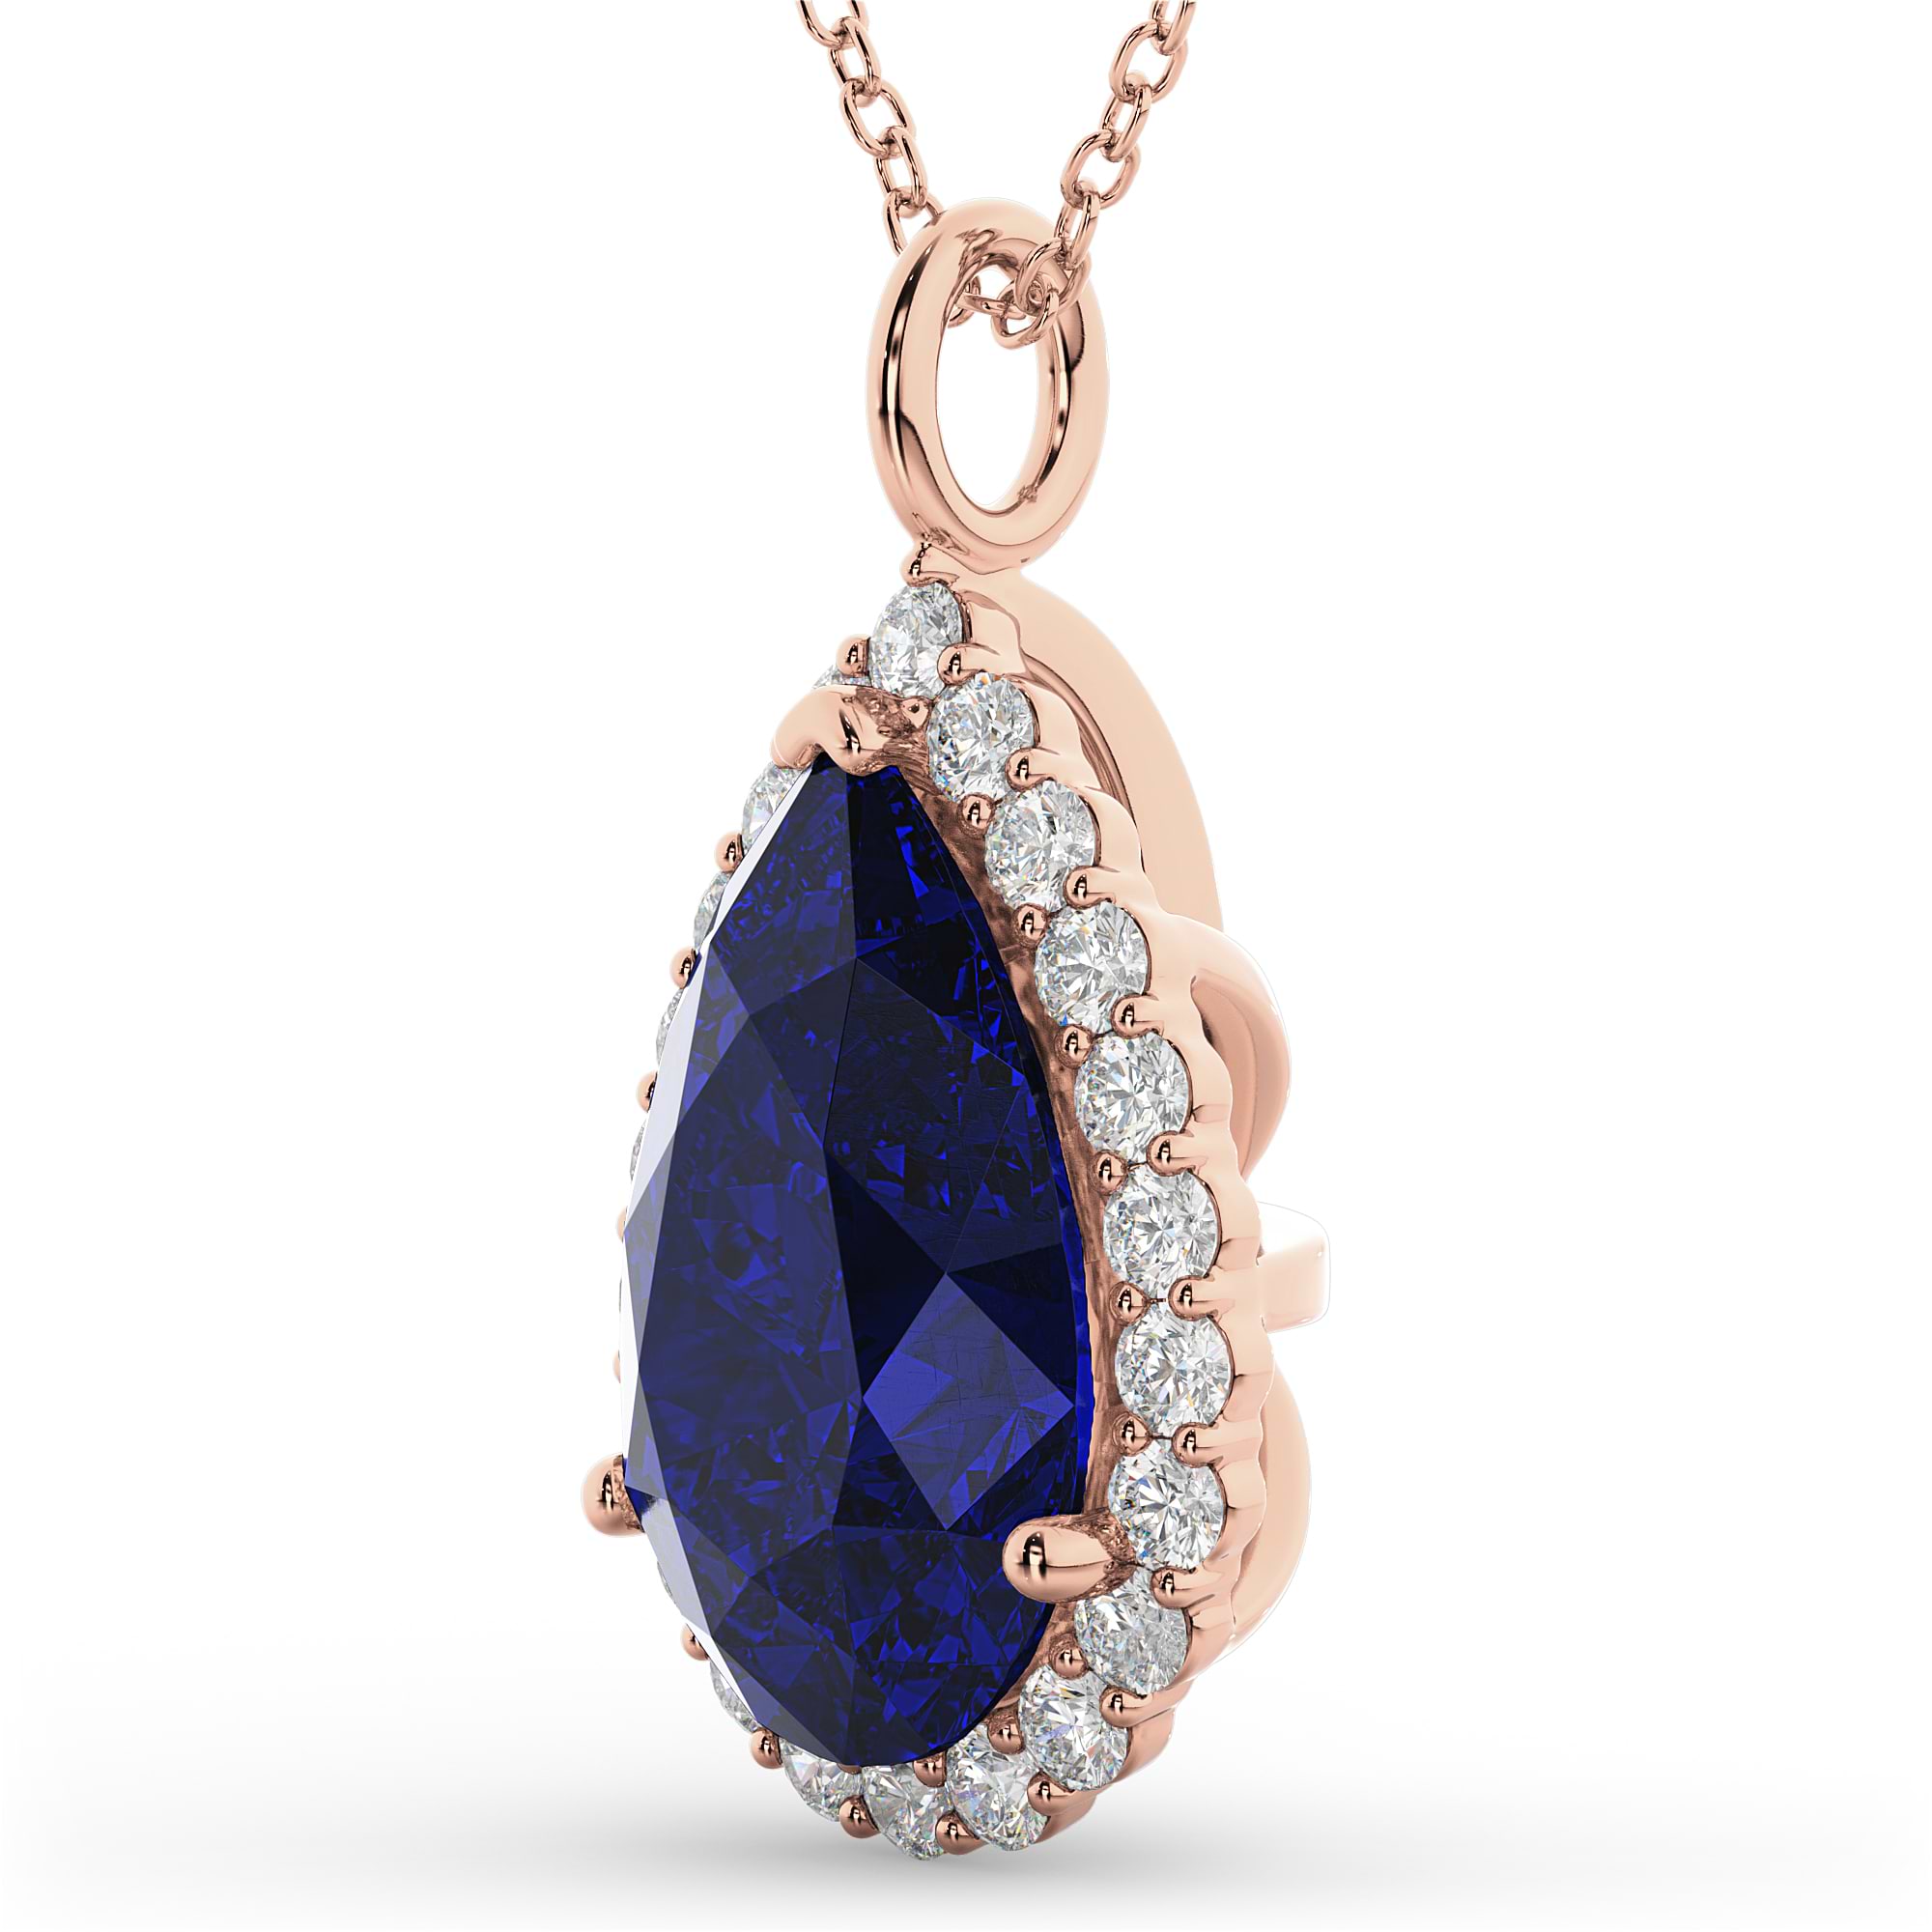 Halo Blue Sapphire & Diamond Pear Shaped Pendant Necklace 14k Rose Gold (8.34ct)